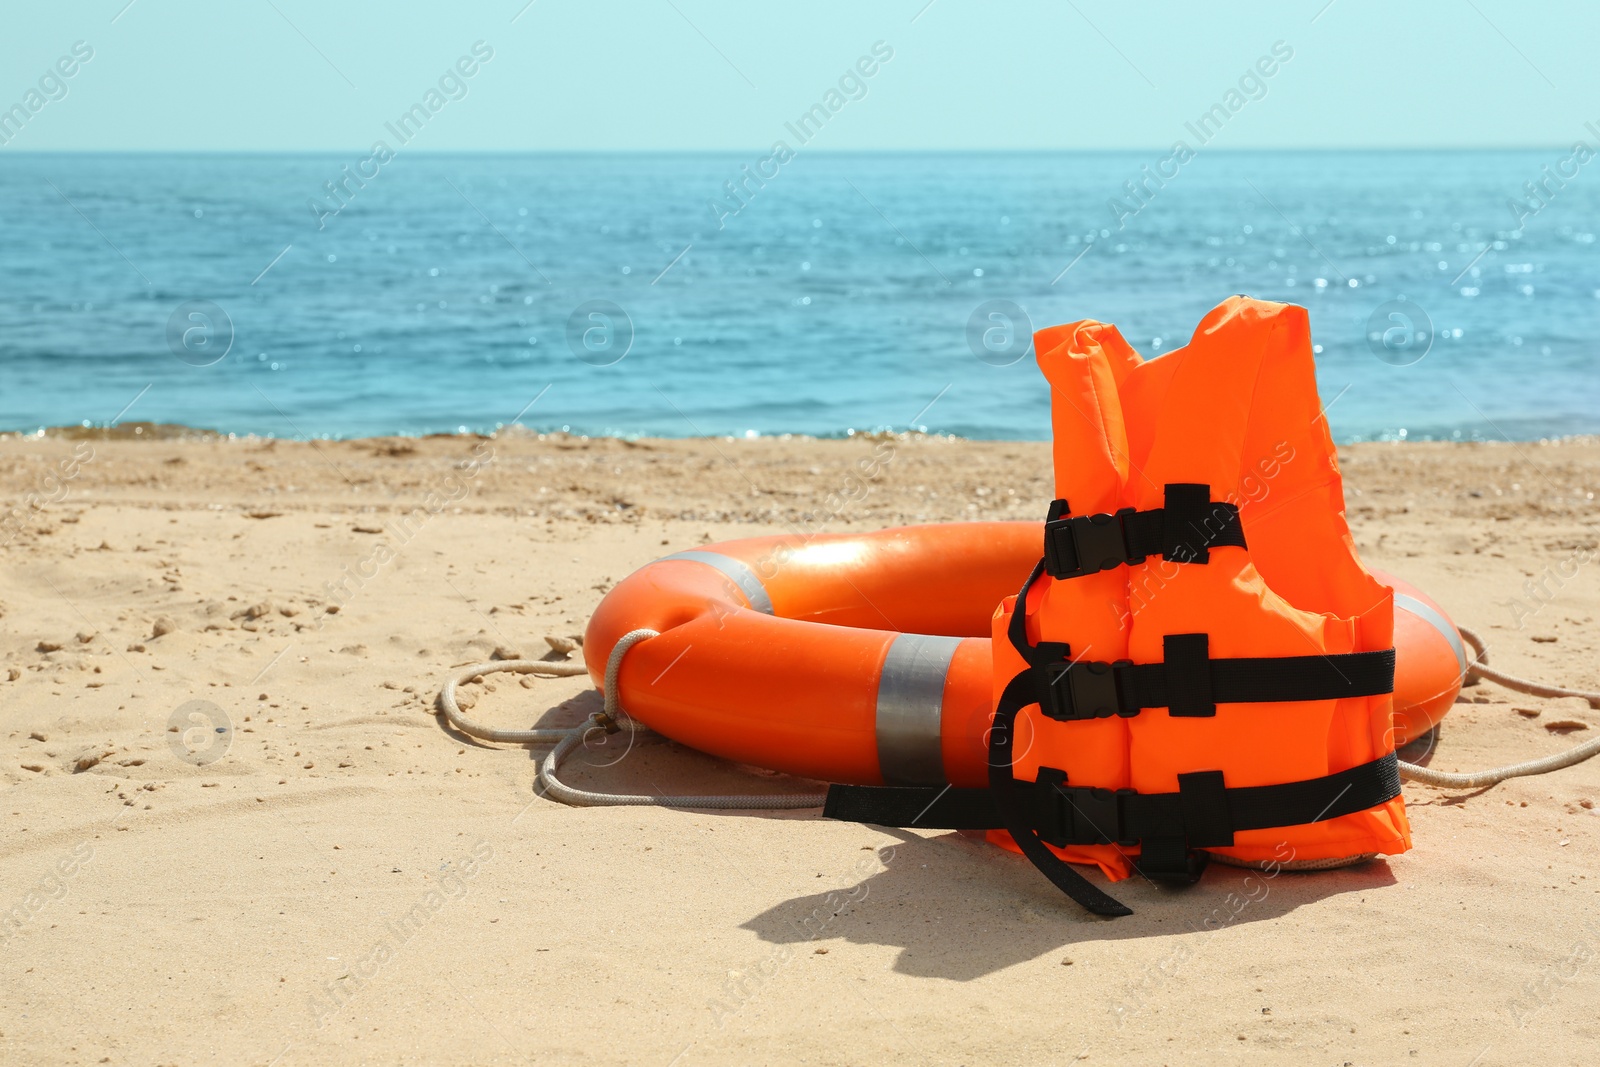 Photo of Orange life jacket and buoy on sandy beach near sea. Emergency rescue equipment